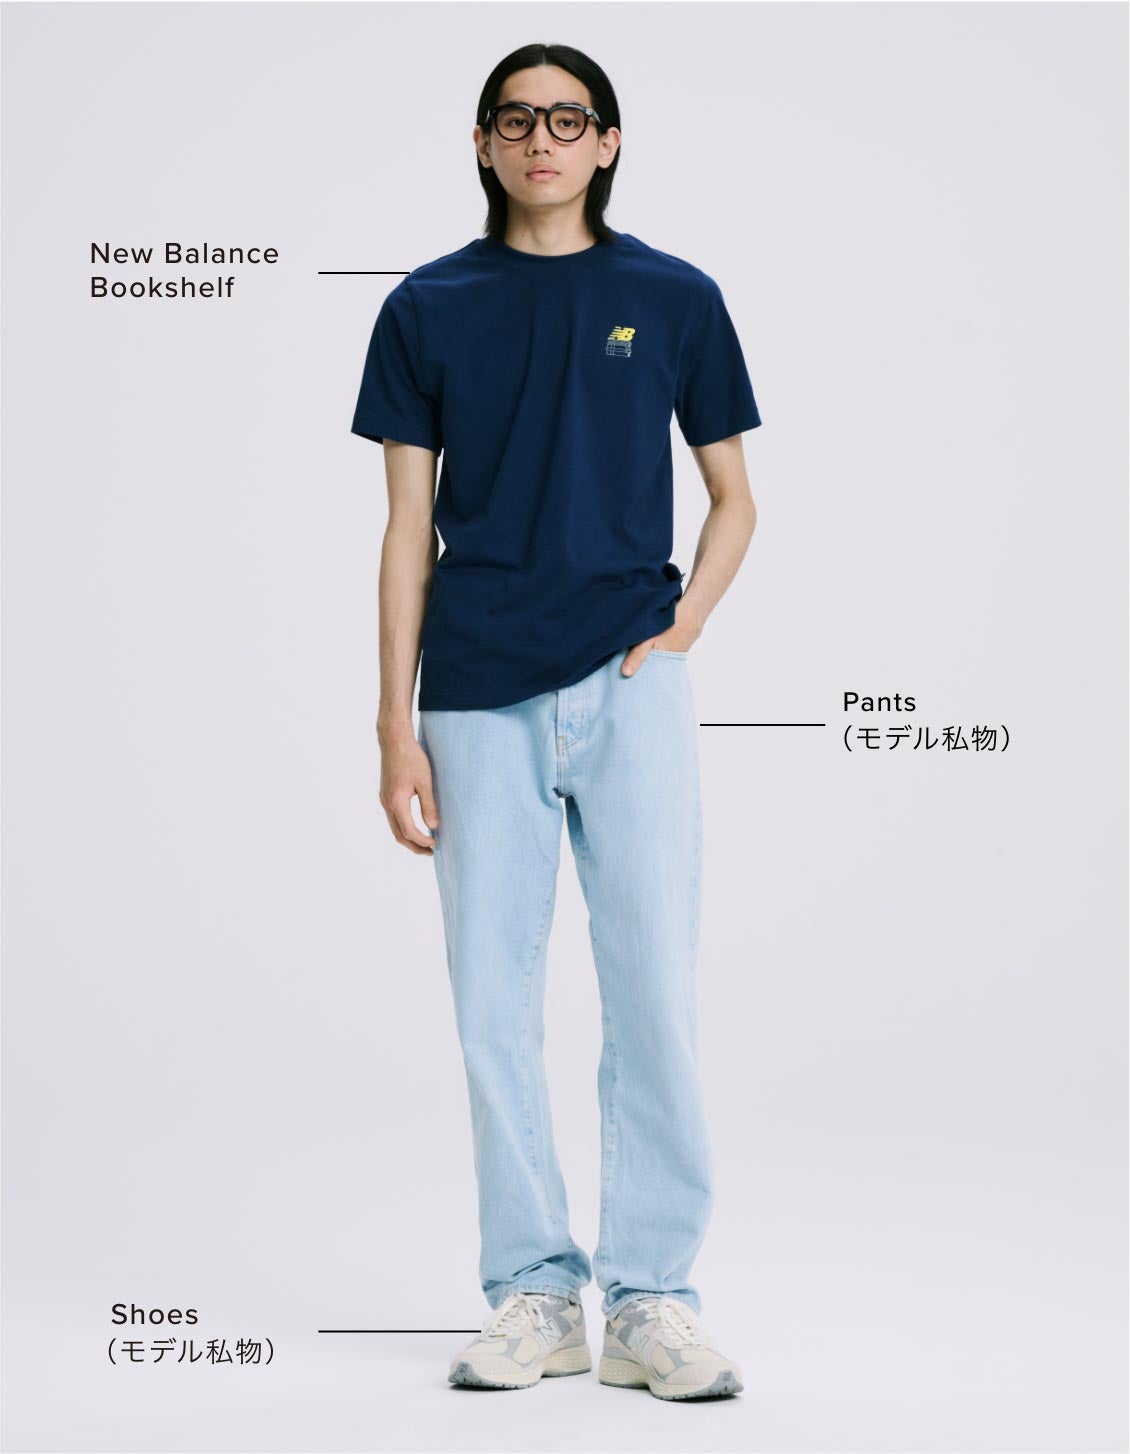 Takuma Endo outfit details: T-shirt: New Balance Bookshelf, Pants: Model's own, Shoes: Model's own